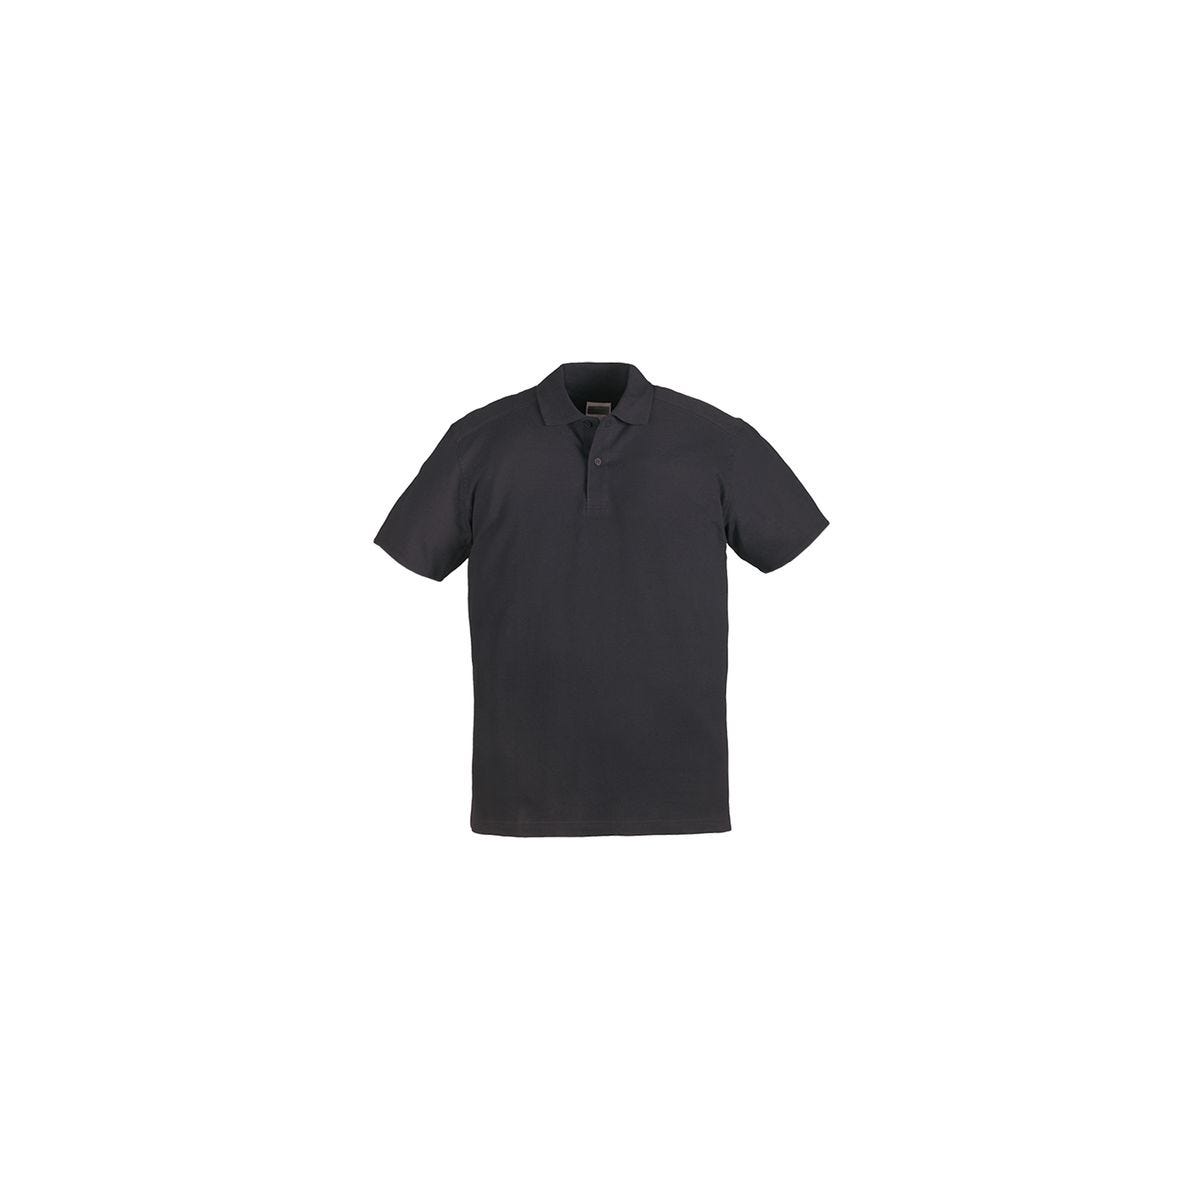 SAFARI Polo MC noir, 100% coton, 220g/m² - COVERGUARD - Taille M 0